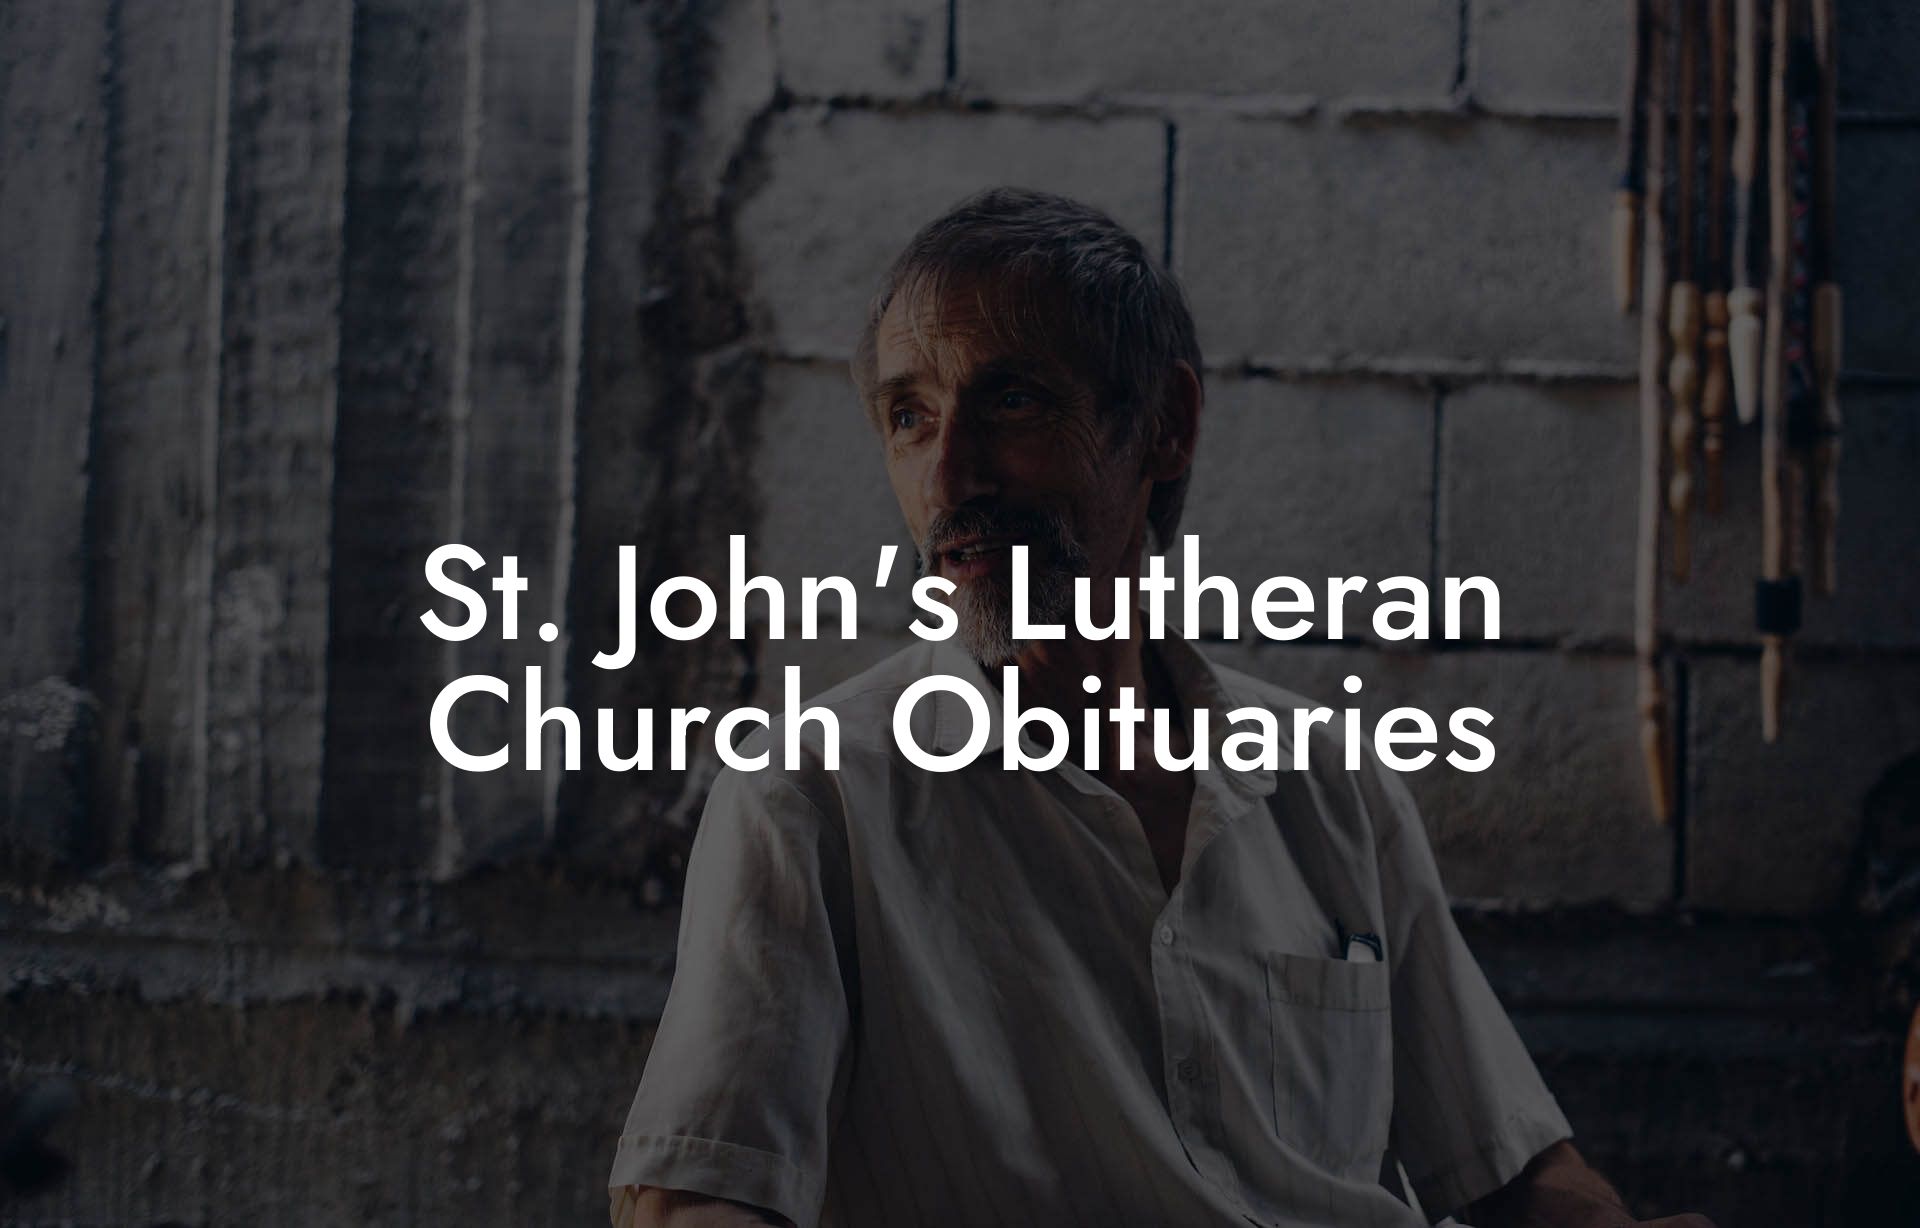 St. John's Lutheran Church Obituaries